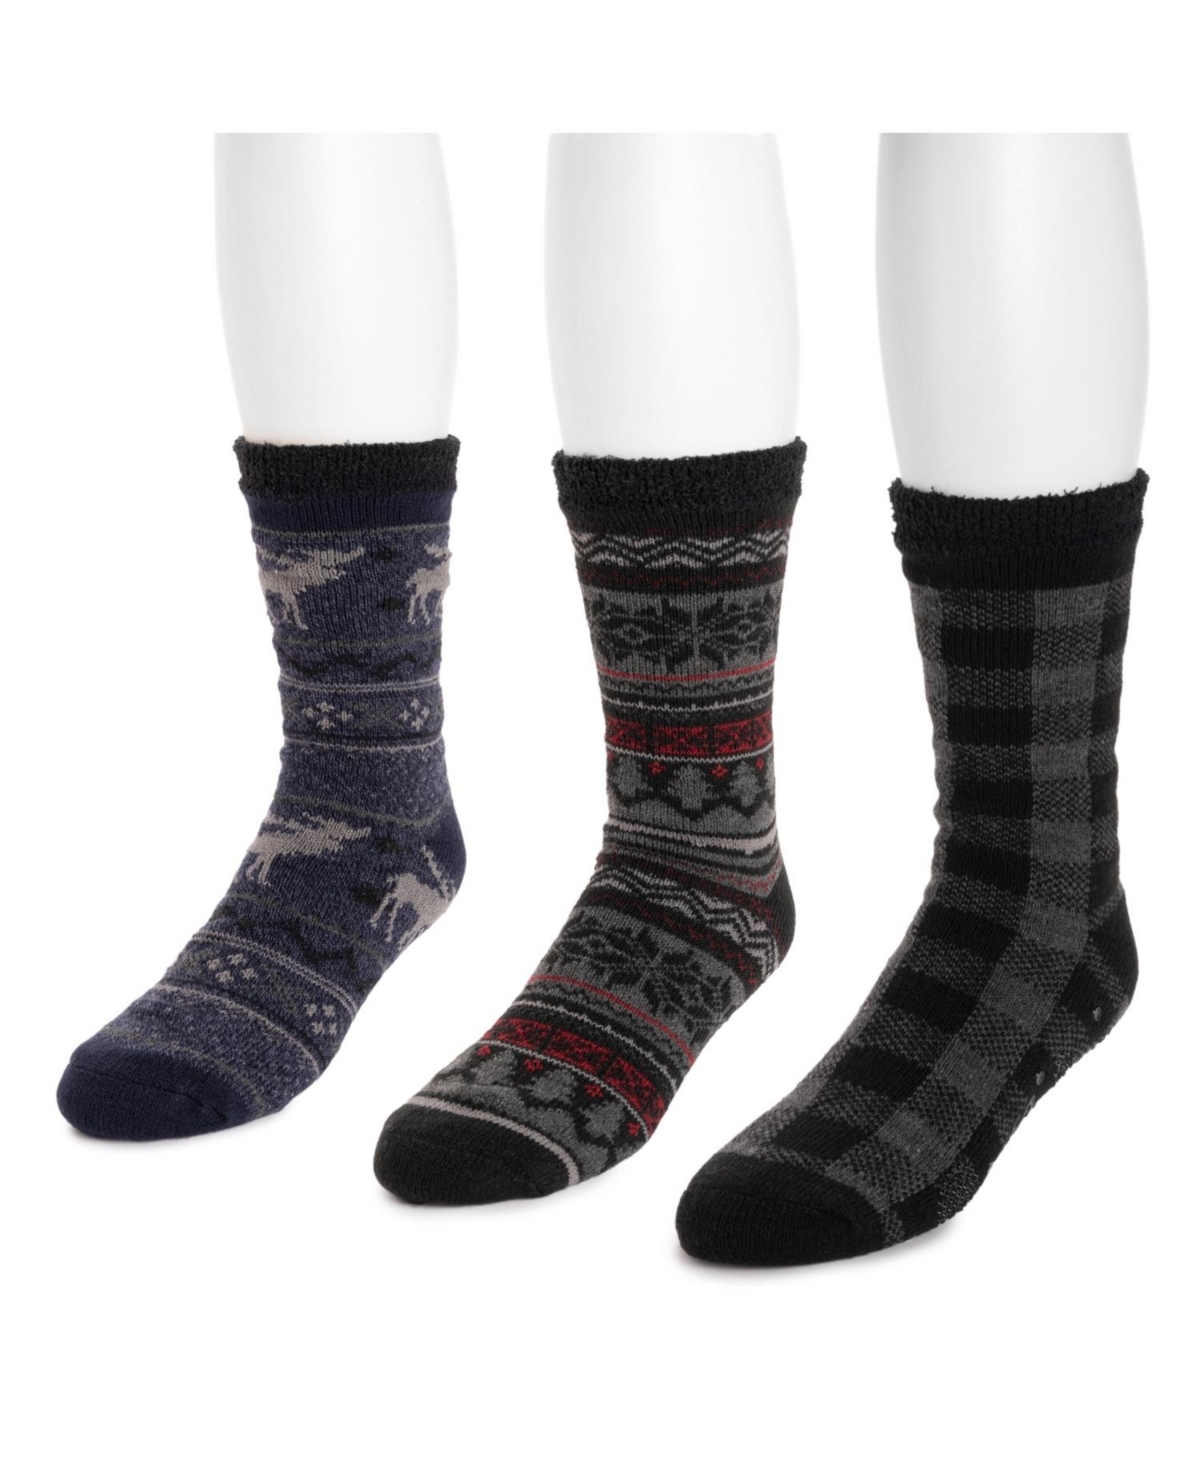 Men's 3 Pair Pack Lined Lounge Sock, Dk Grey/Ebony/Twilight, One Size - Dark grey/ebony/twilight